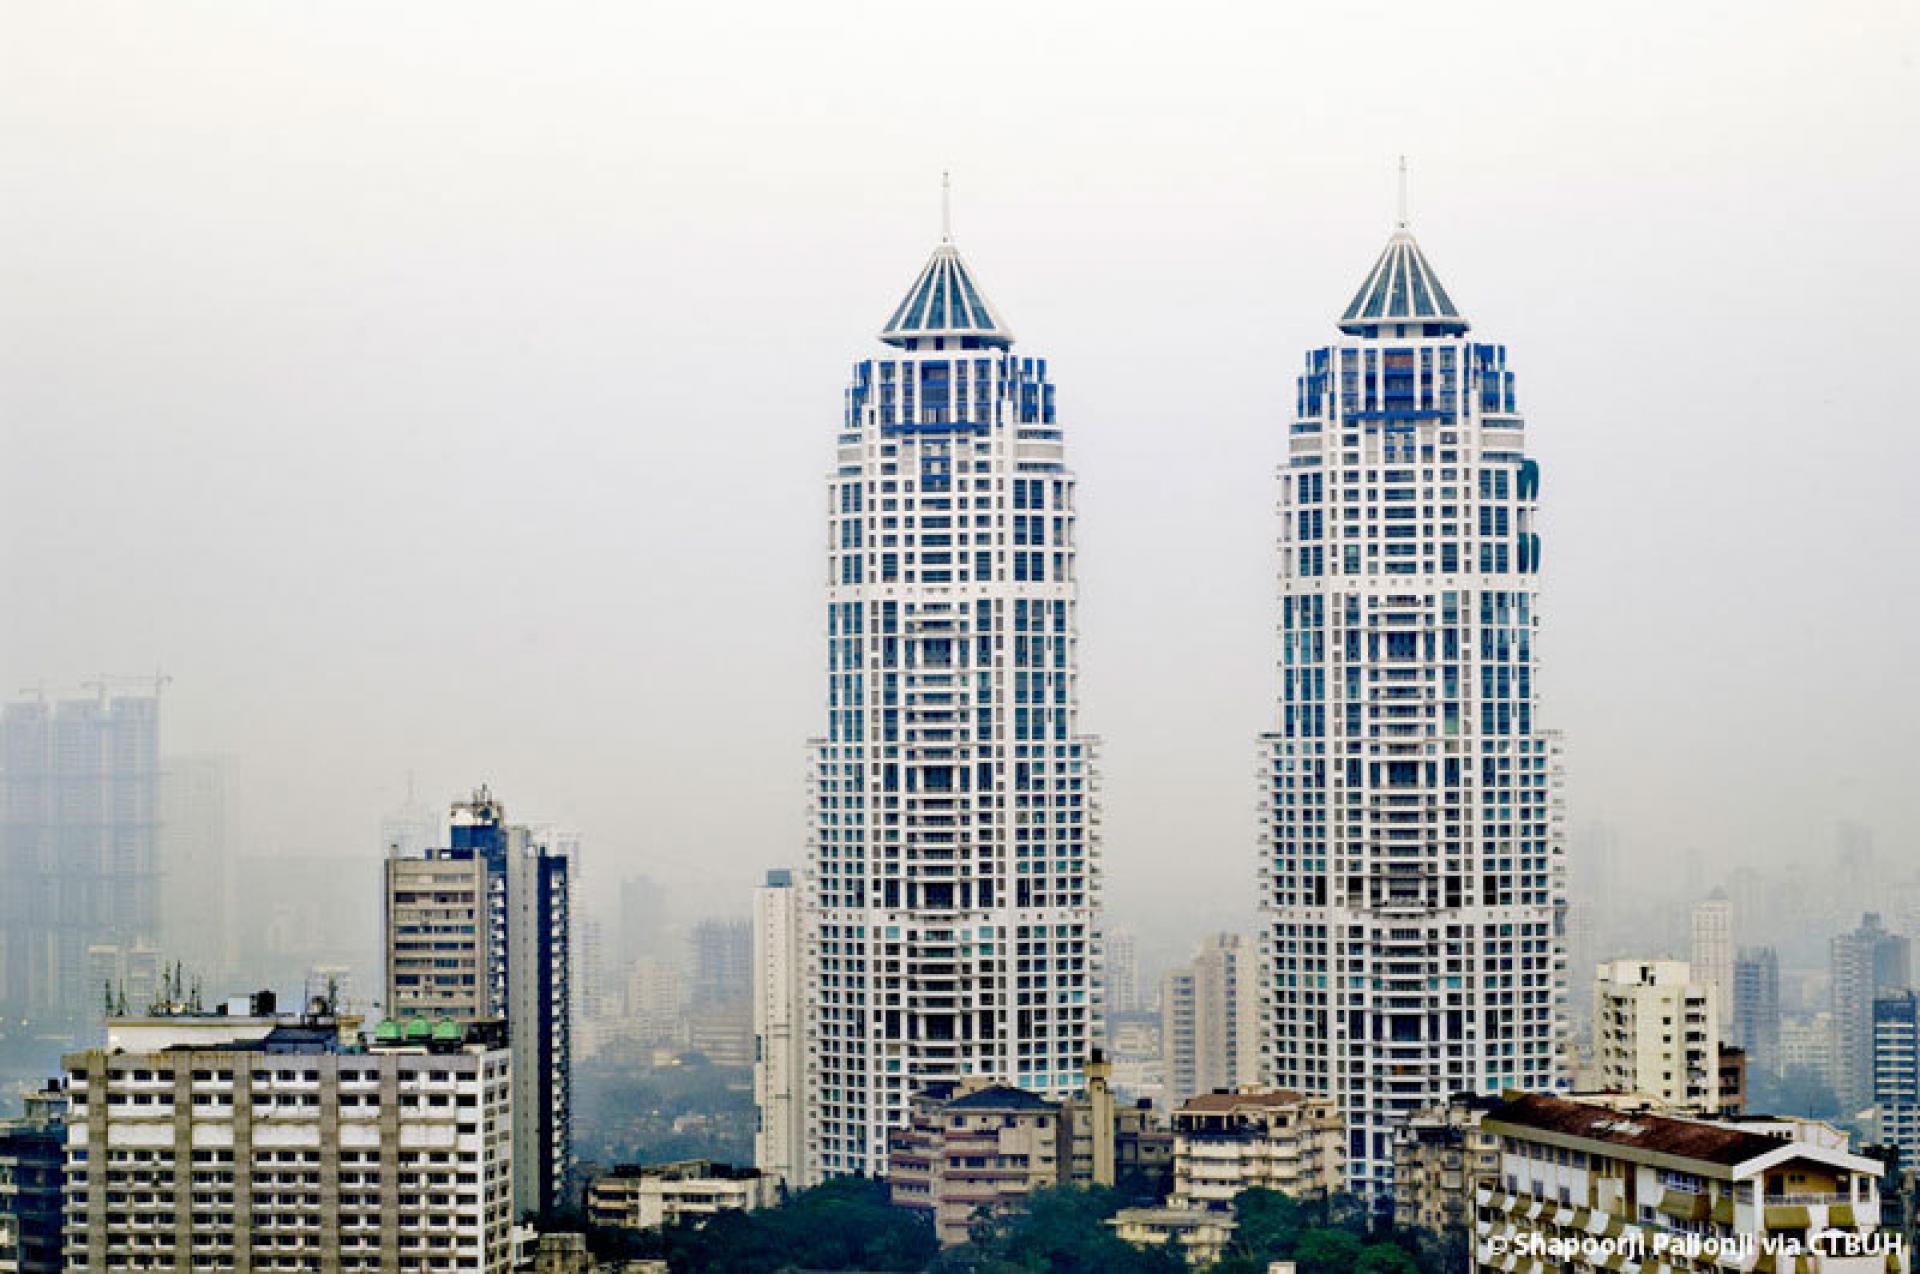 The Imperial Towers II in Mumbai. | Photo via Skyscrapercenter